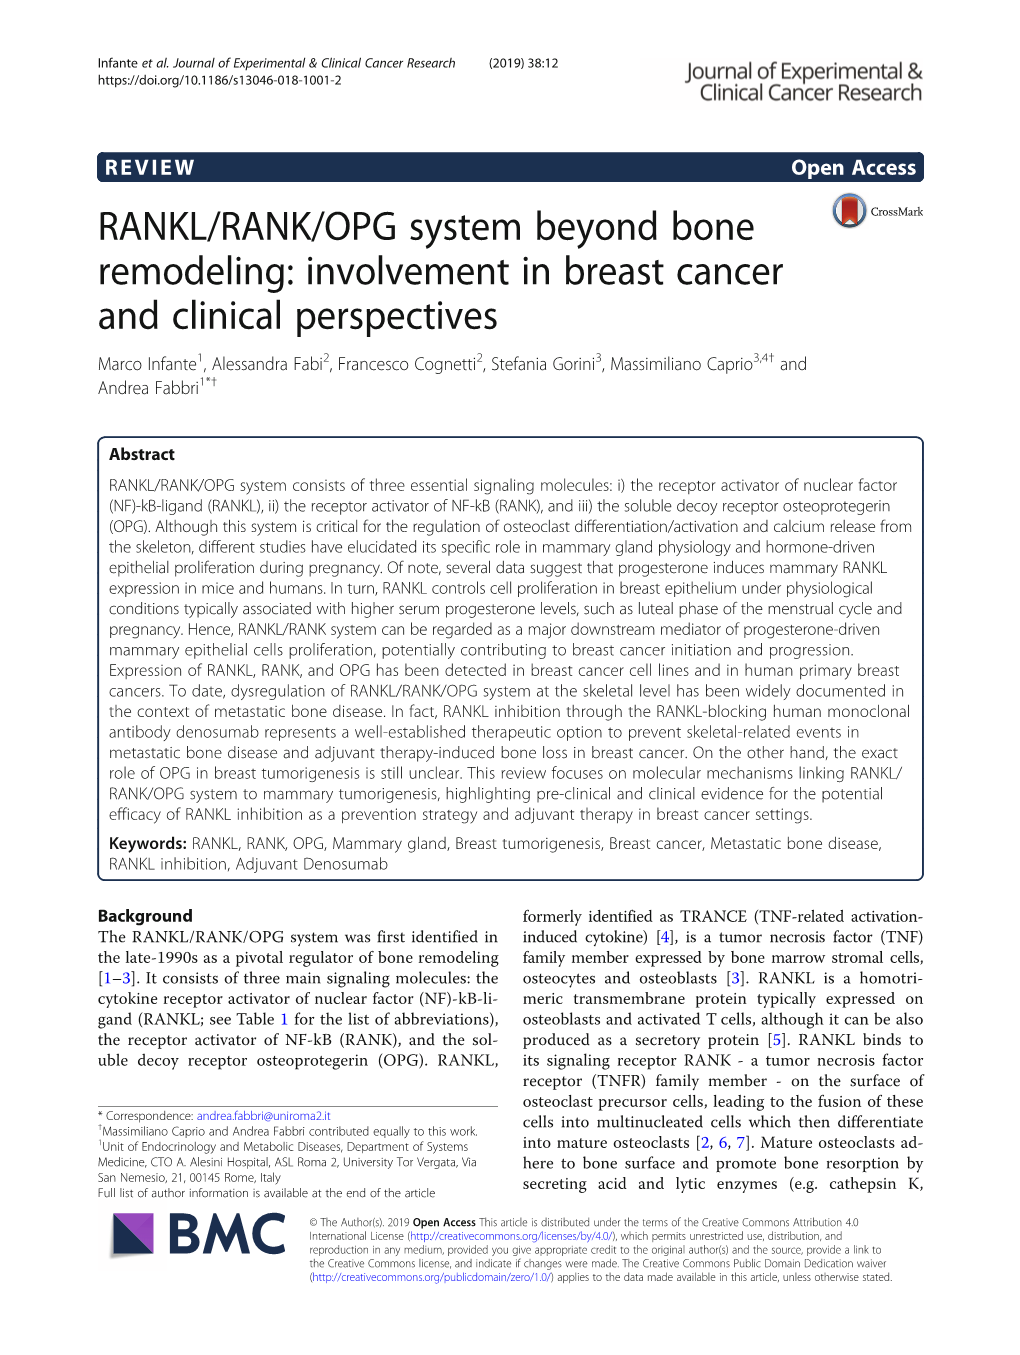 RANKL/RANK/OPG System Beyond Bone Remodeling